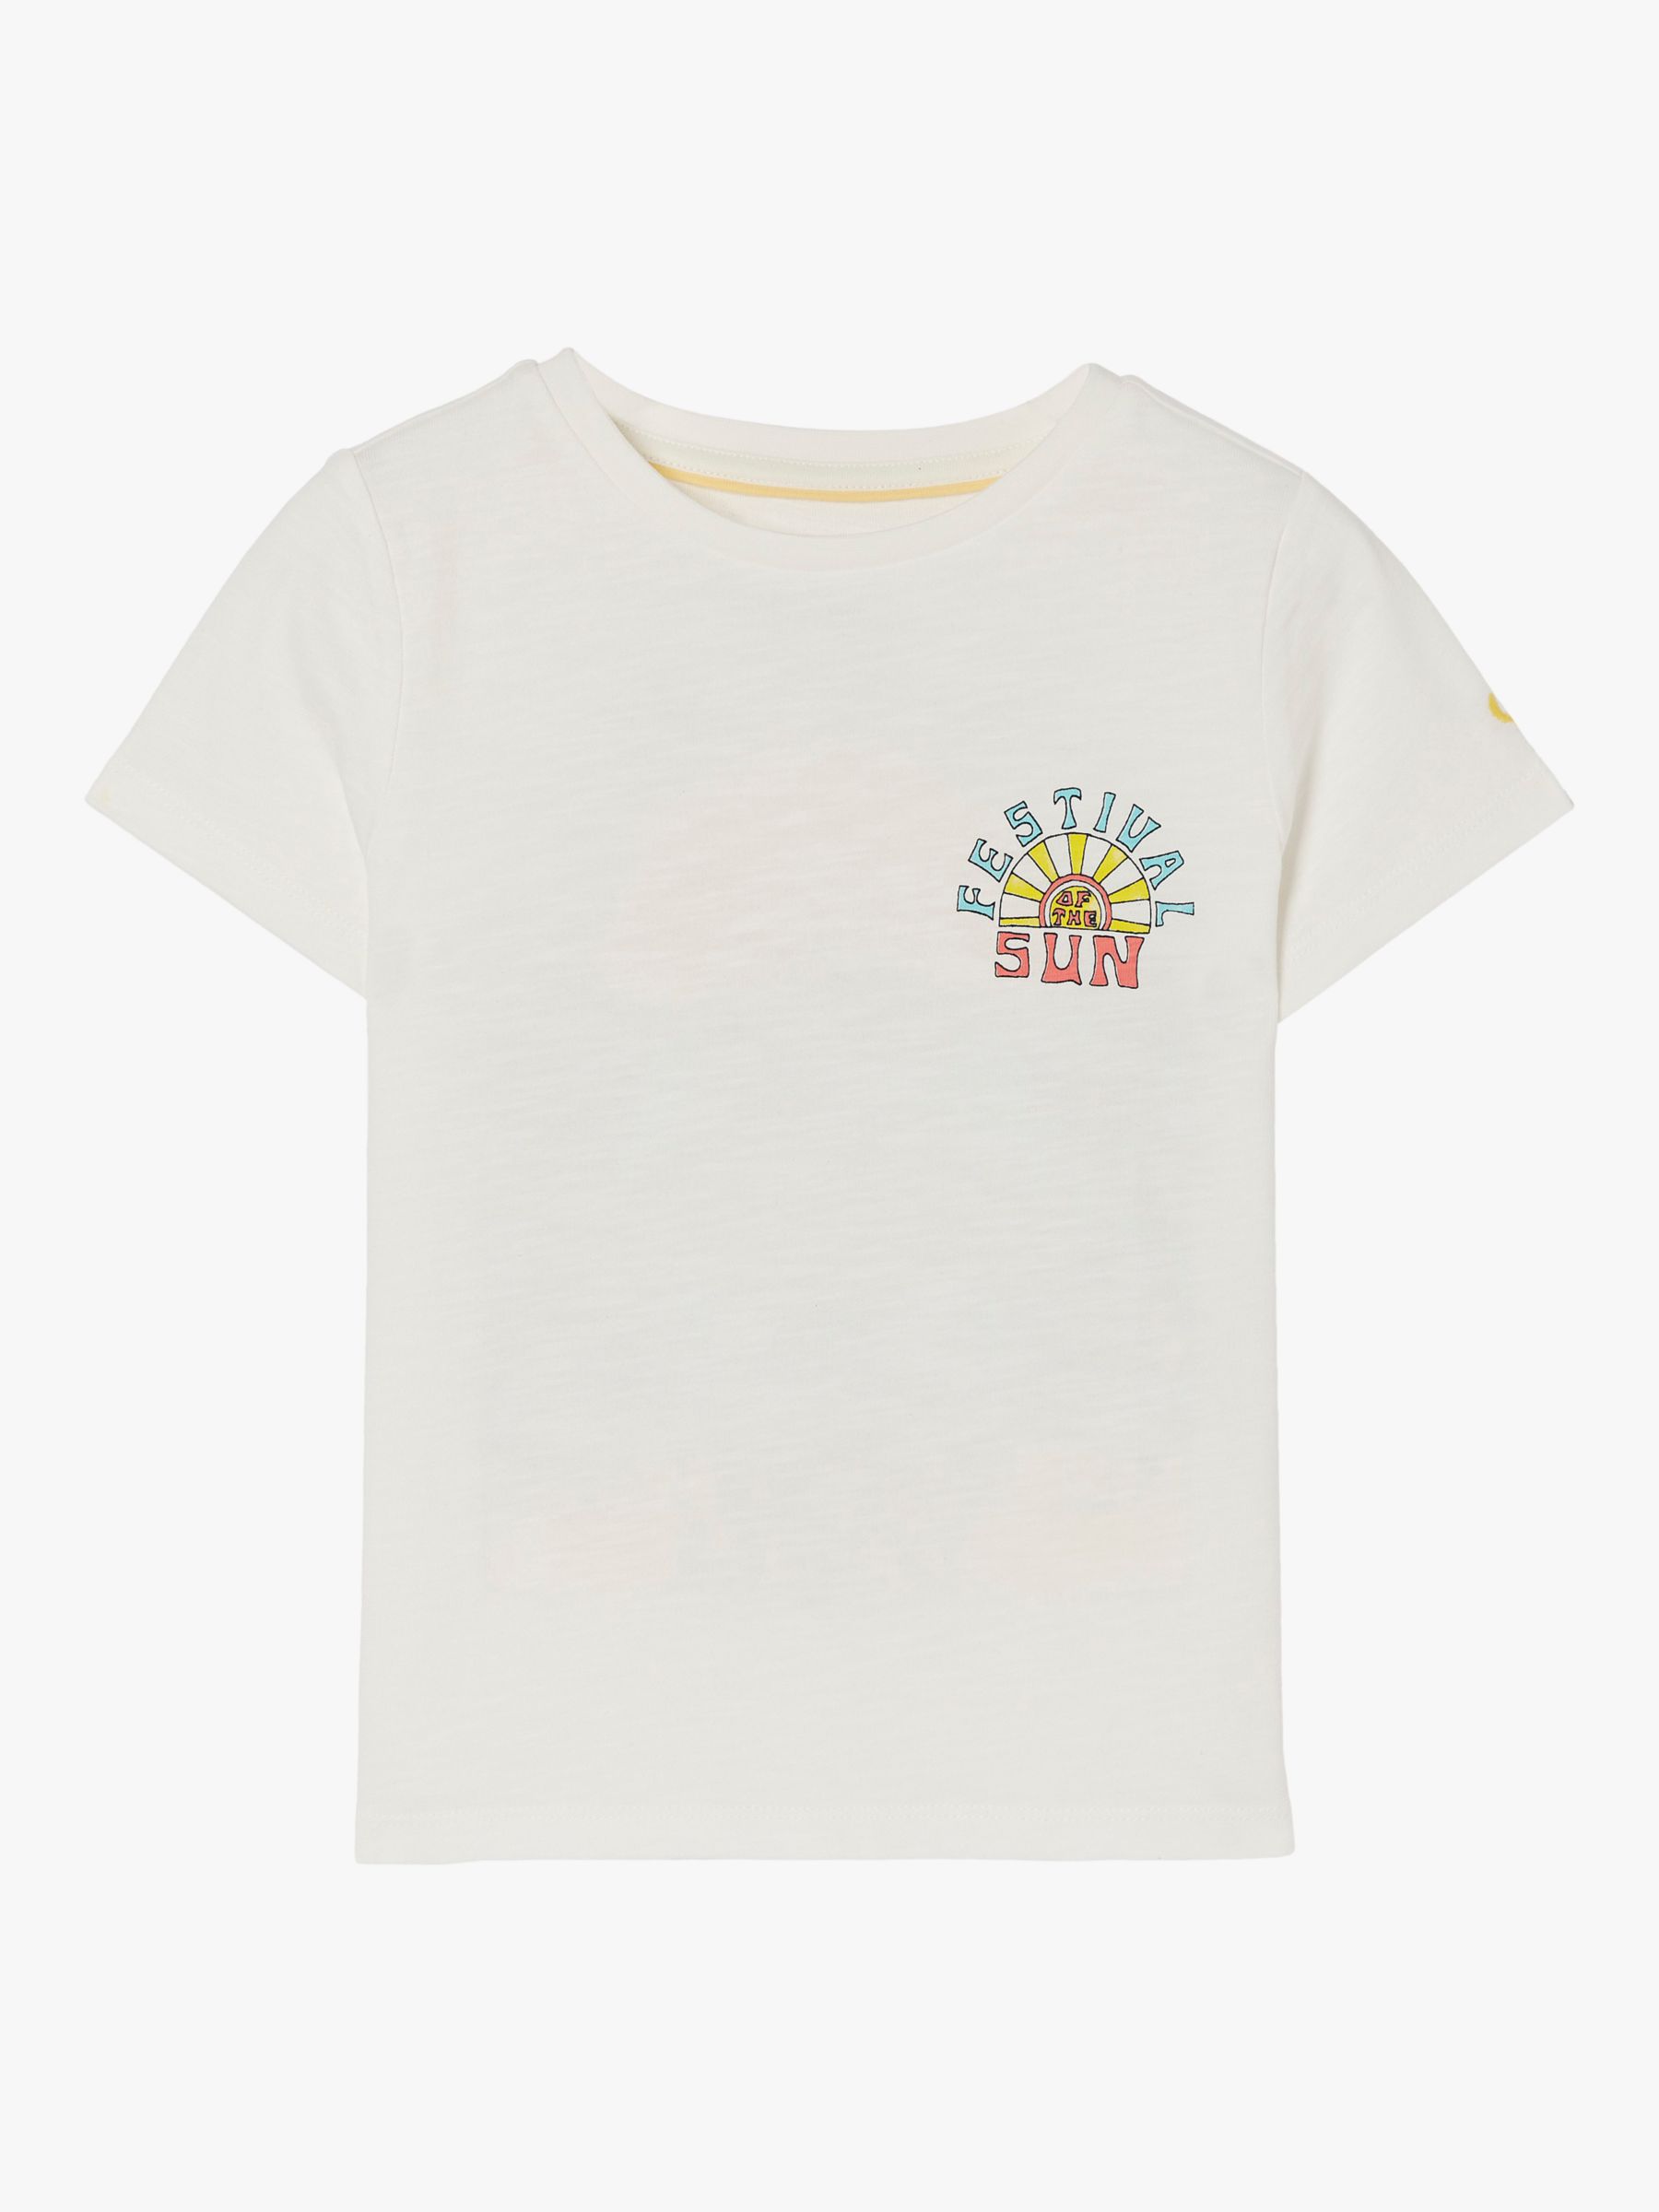 FatFace Kids' Festival Sun Print T-Shirt, Ecru at John Lewis & Partners